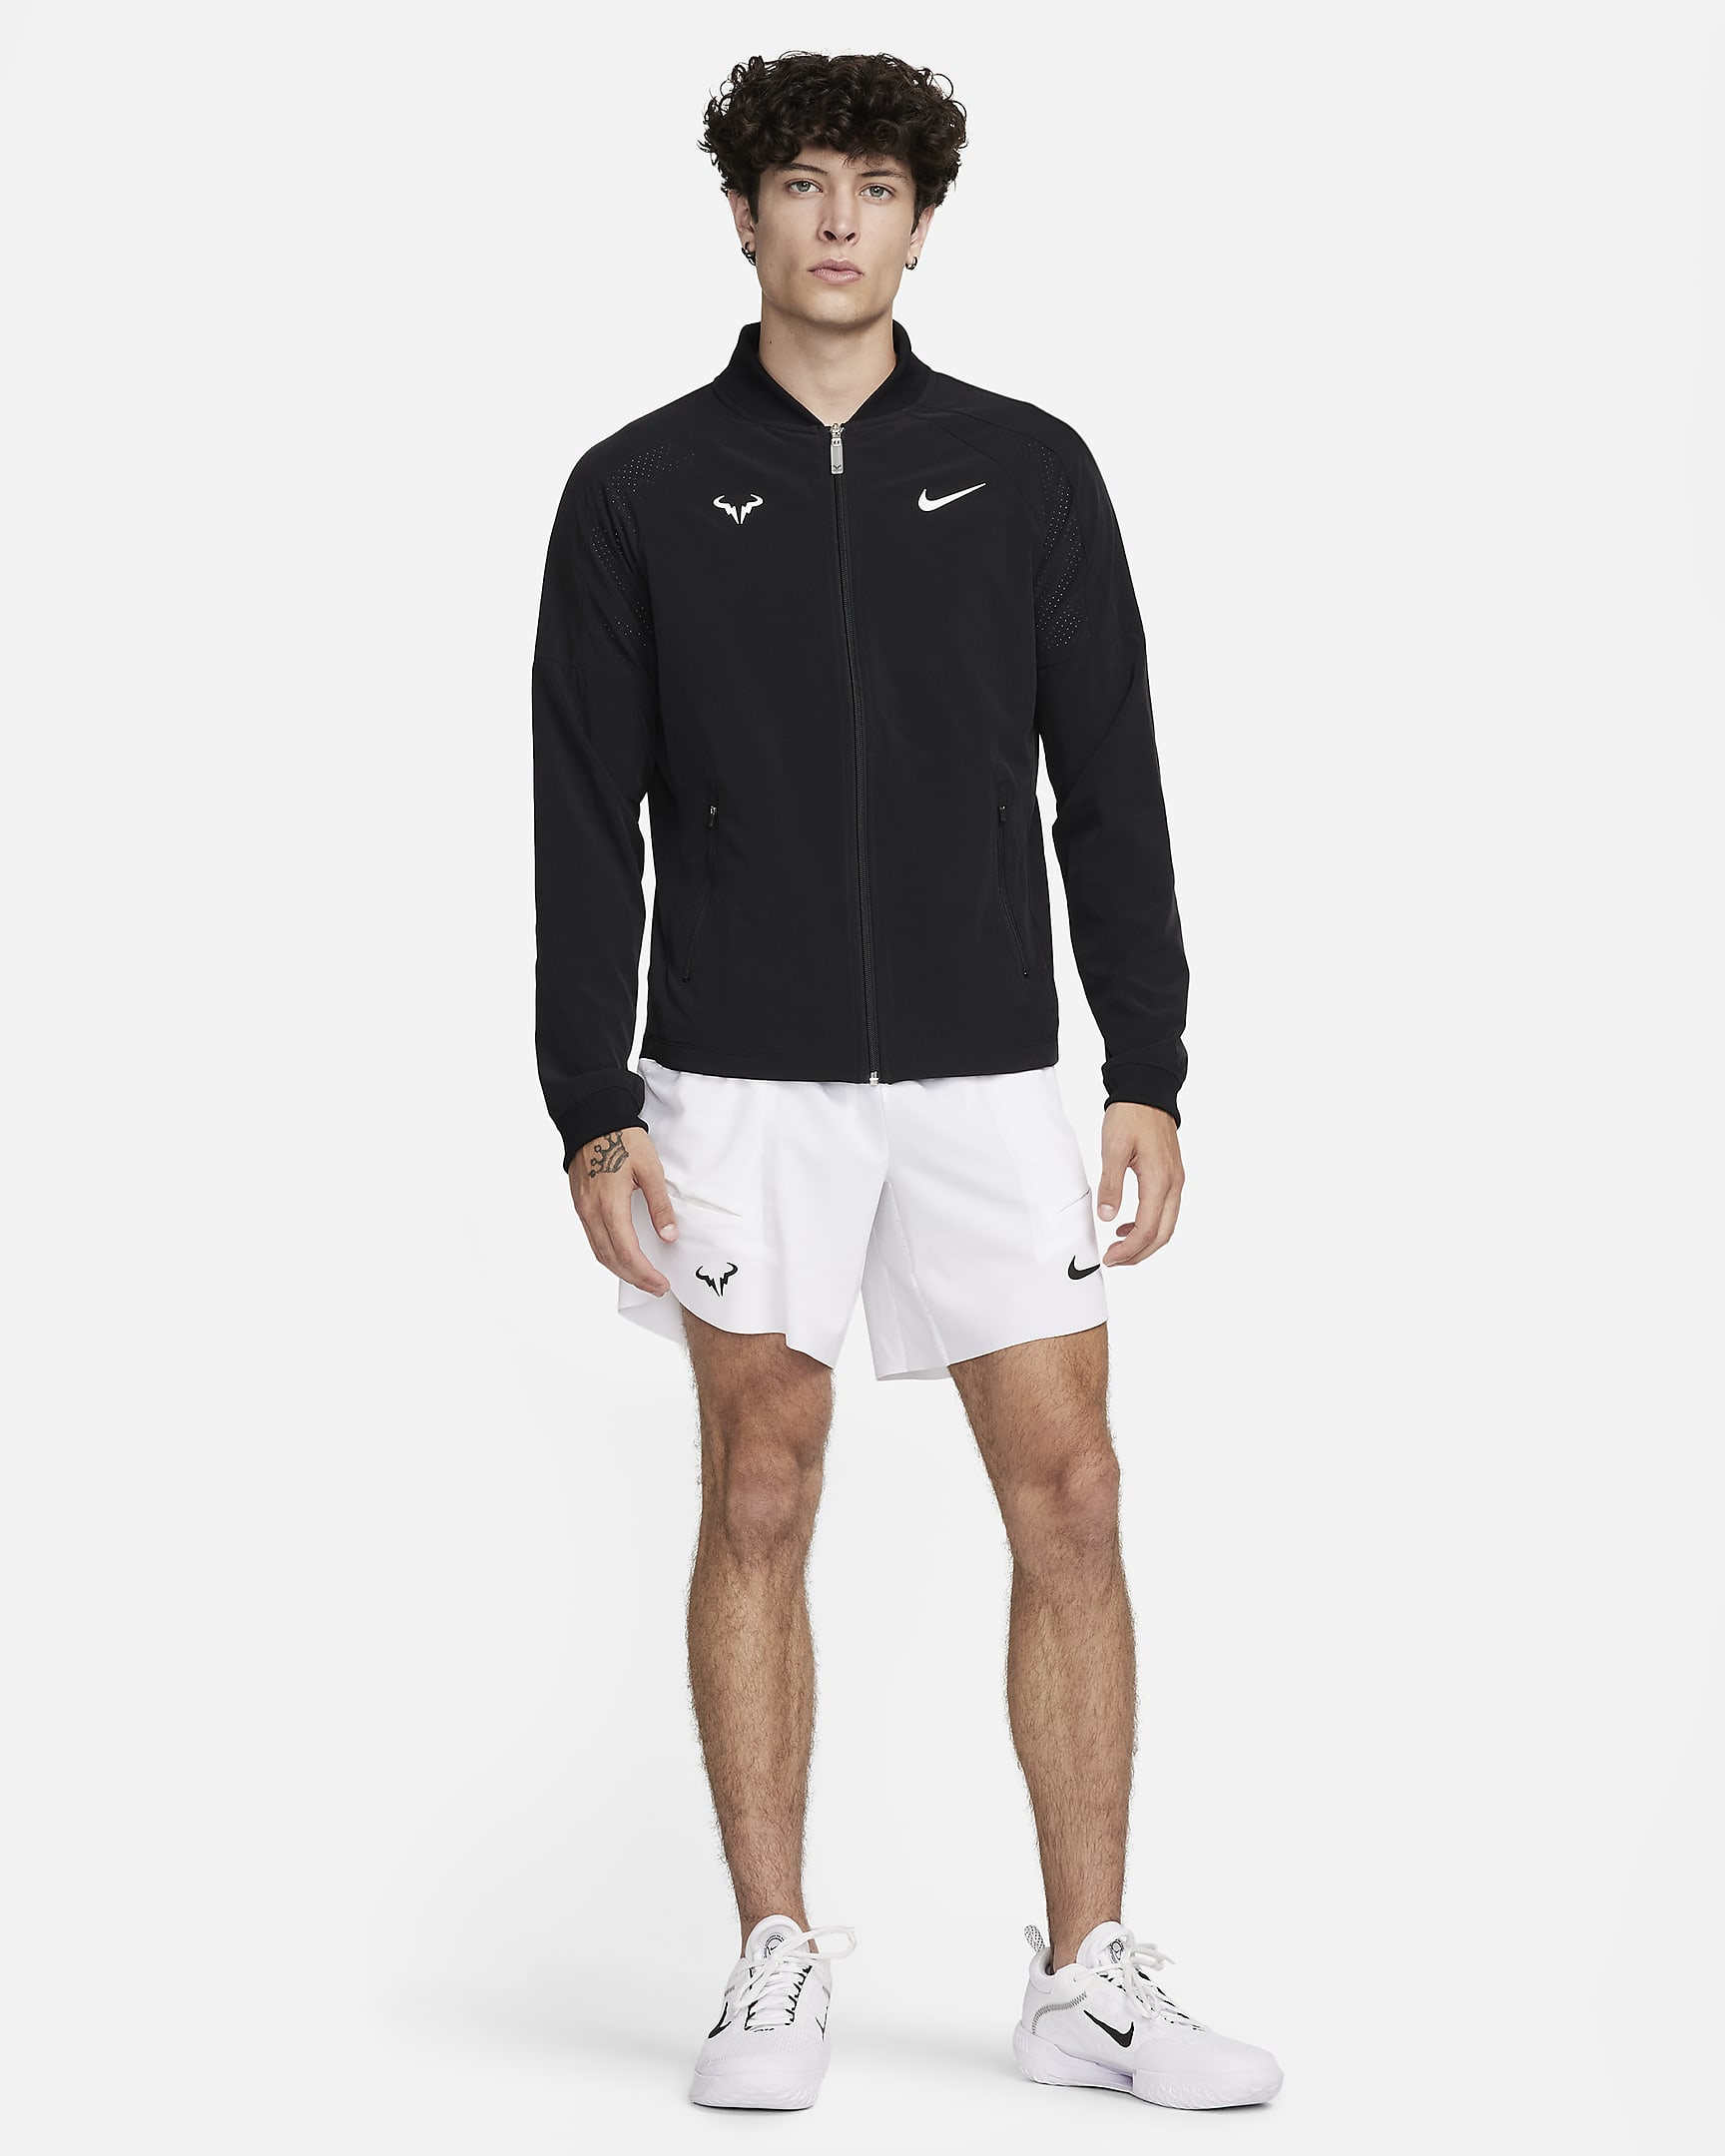 Nike Dri-FIT Rafa Men's Tennis Jacket. Nike FI